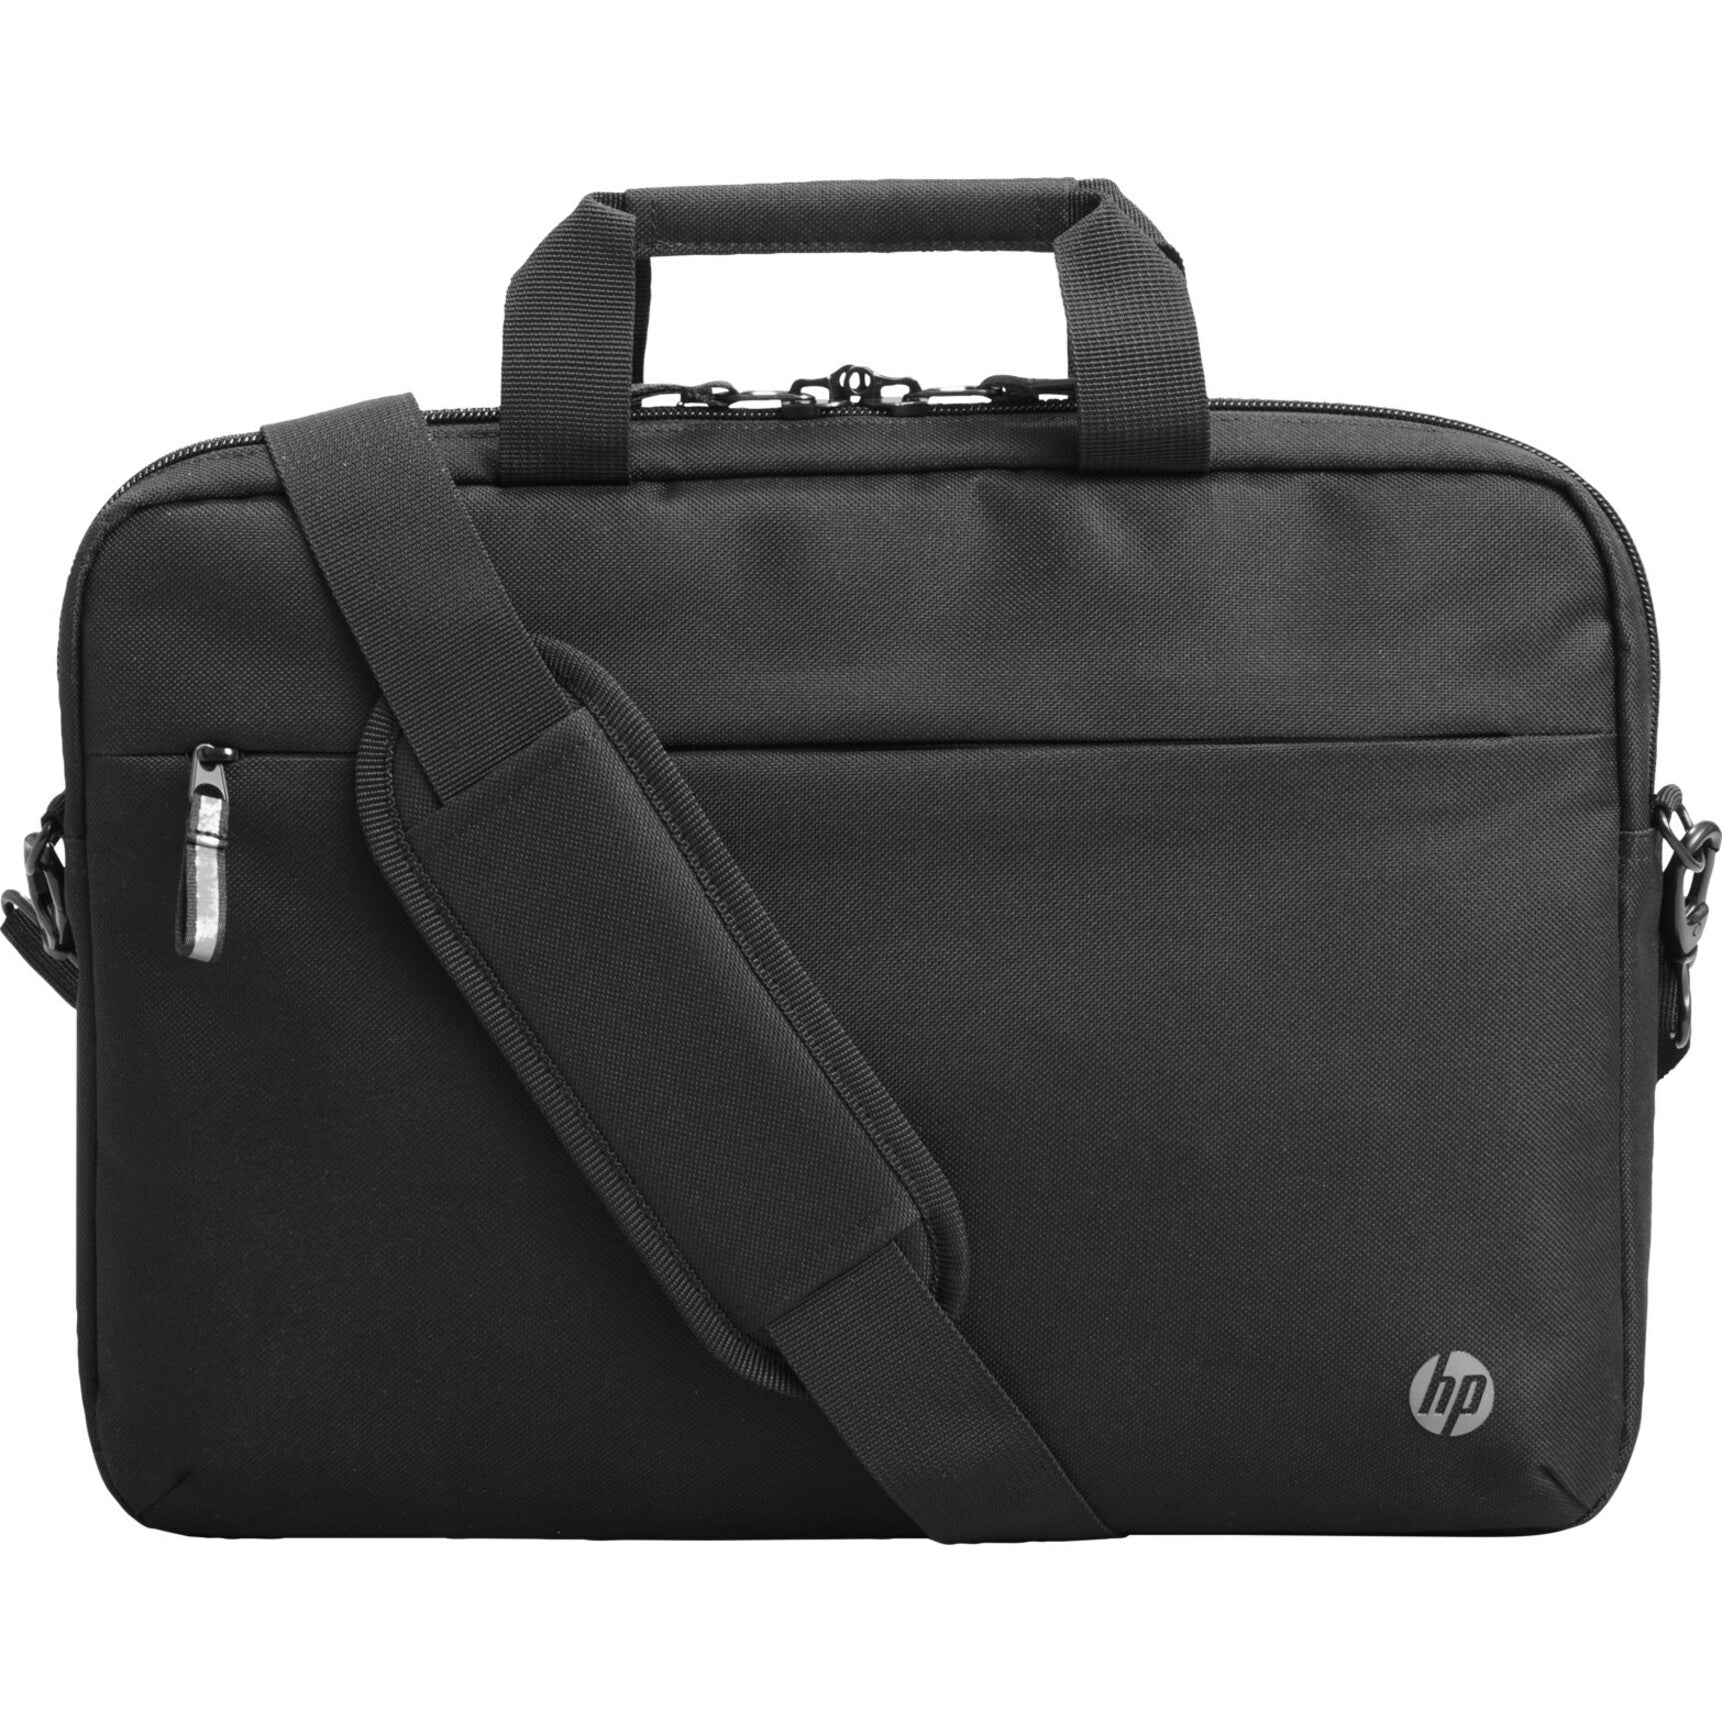 HP 3E2U6UT Renew Business 17.3-inch Laptop Bag, Zipper Closure, Black, Lightweight and Durable